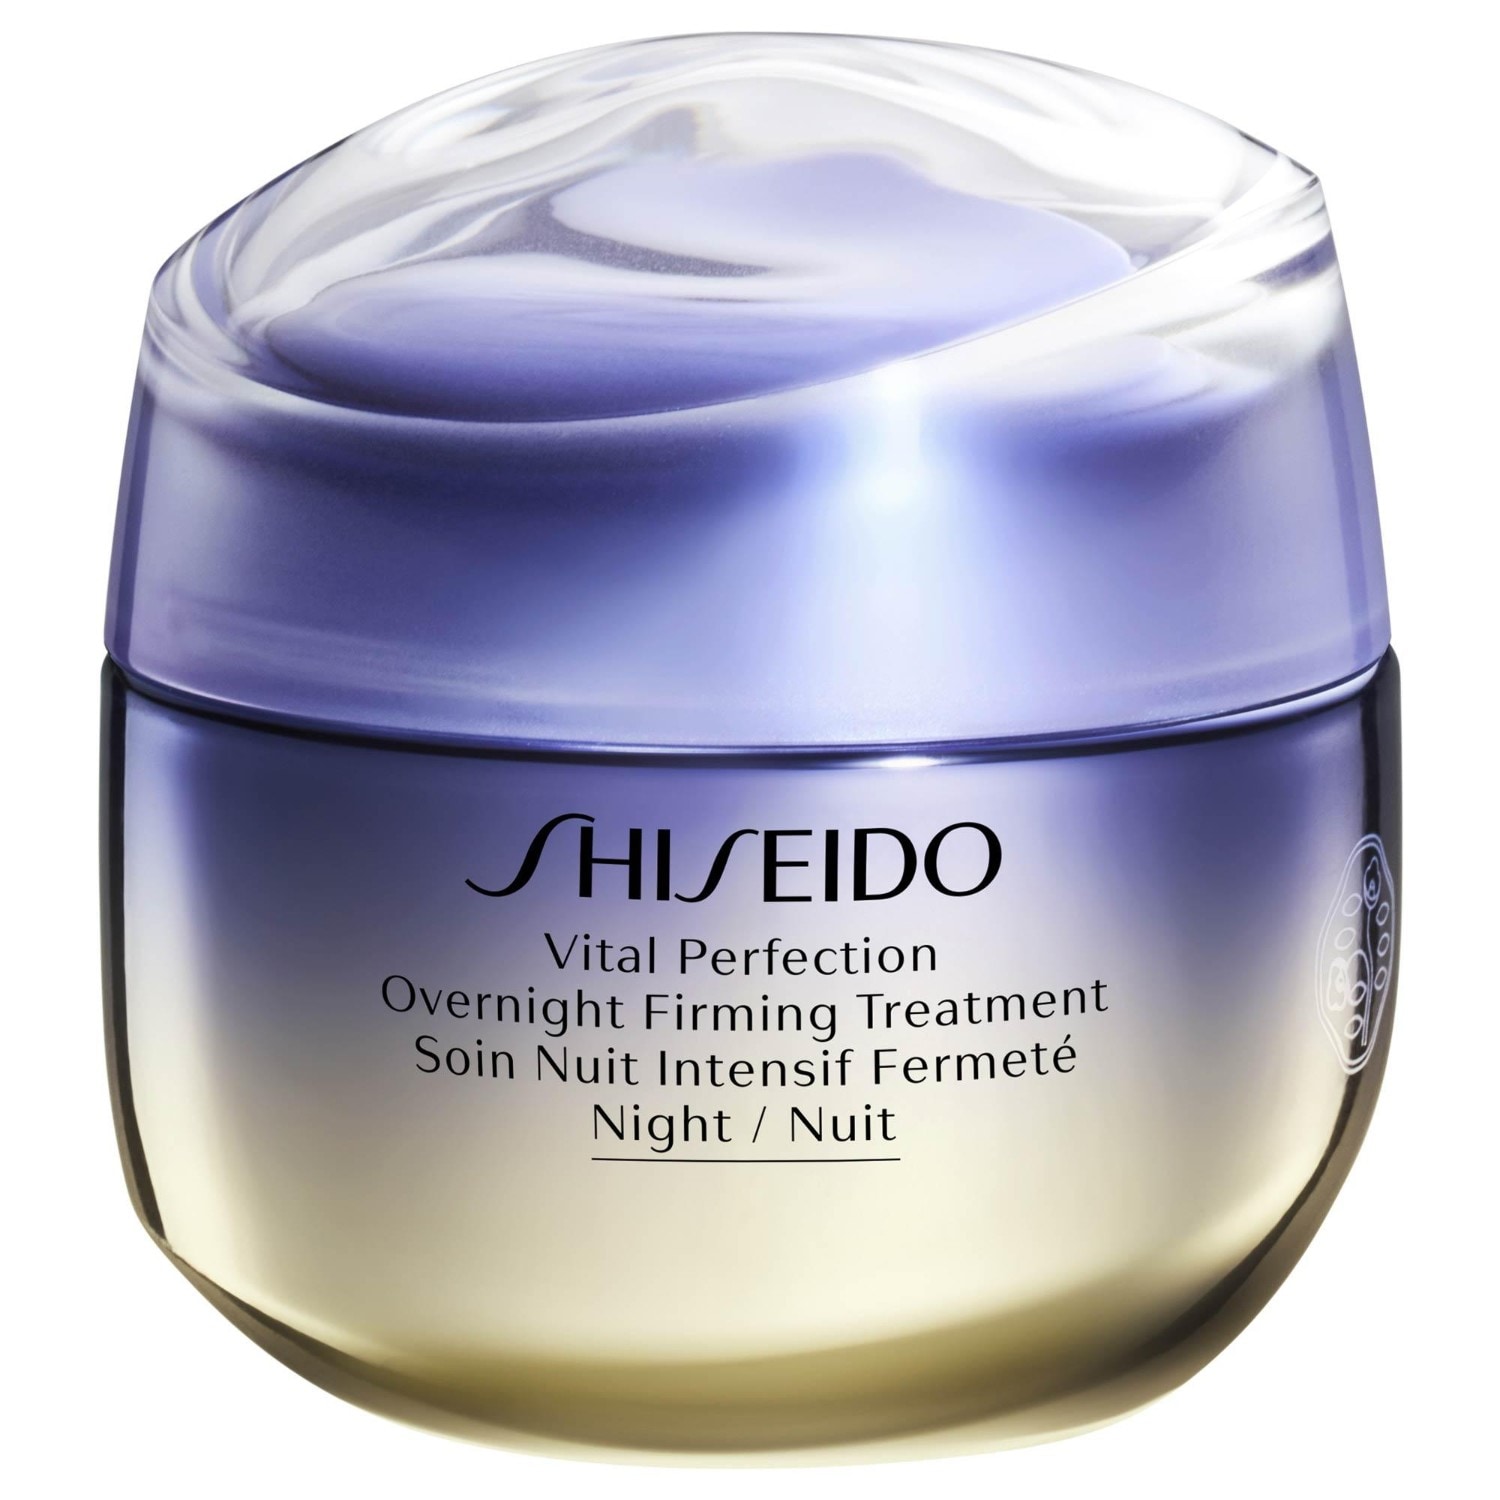 Shiseido VITAL PERFECTION Overnight Firming Treatment